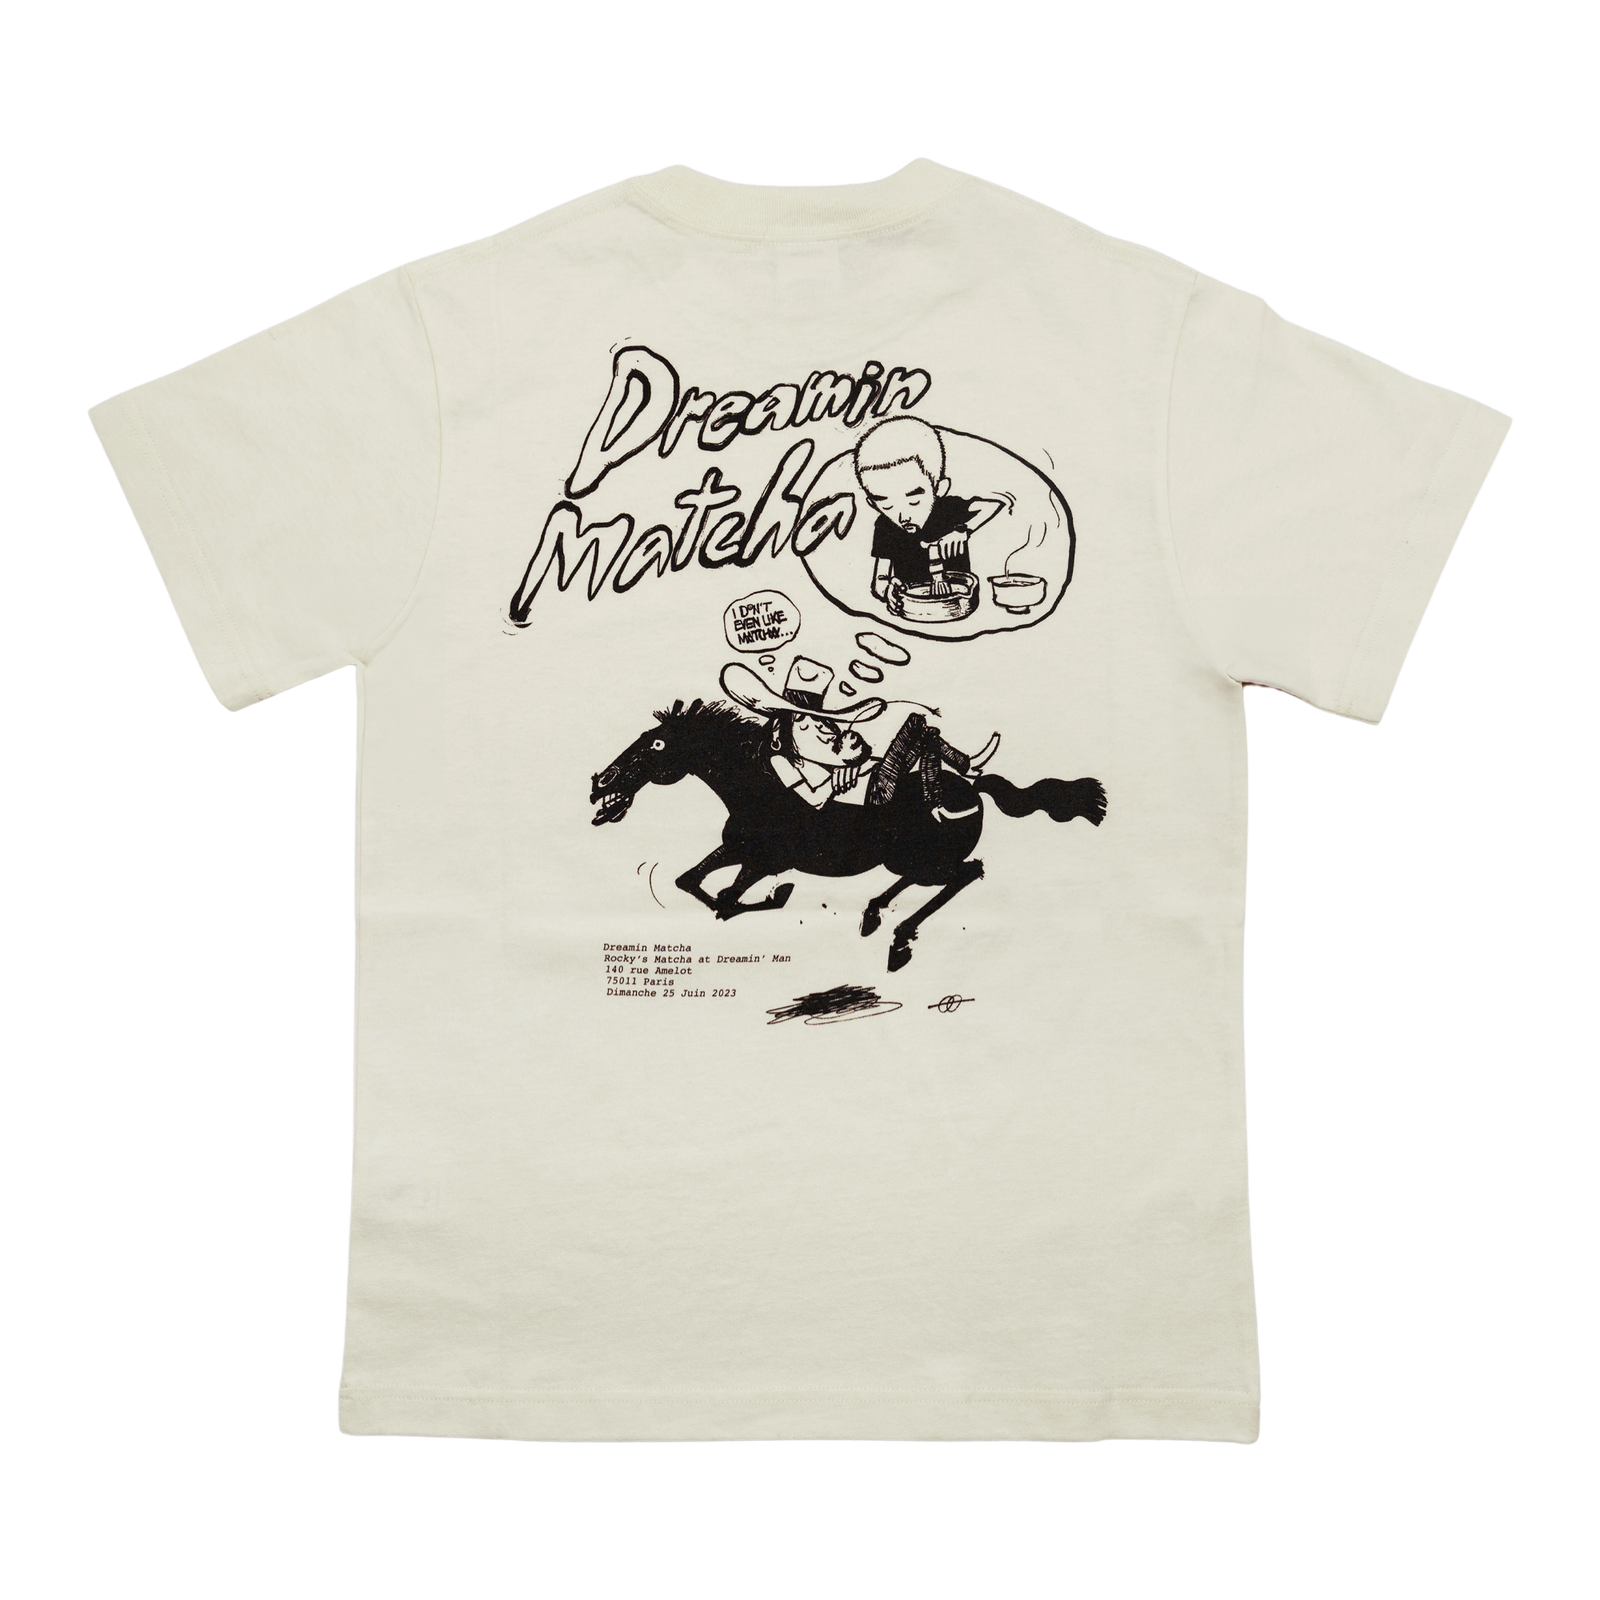 Dreamin Man X Rocky S Matcha X Soulgoods T Shirt-0